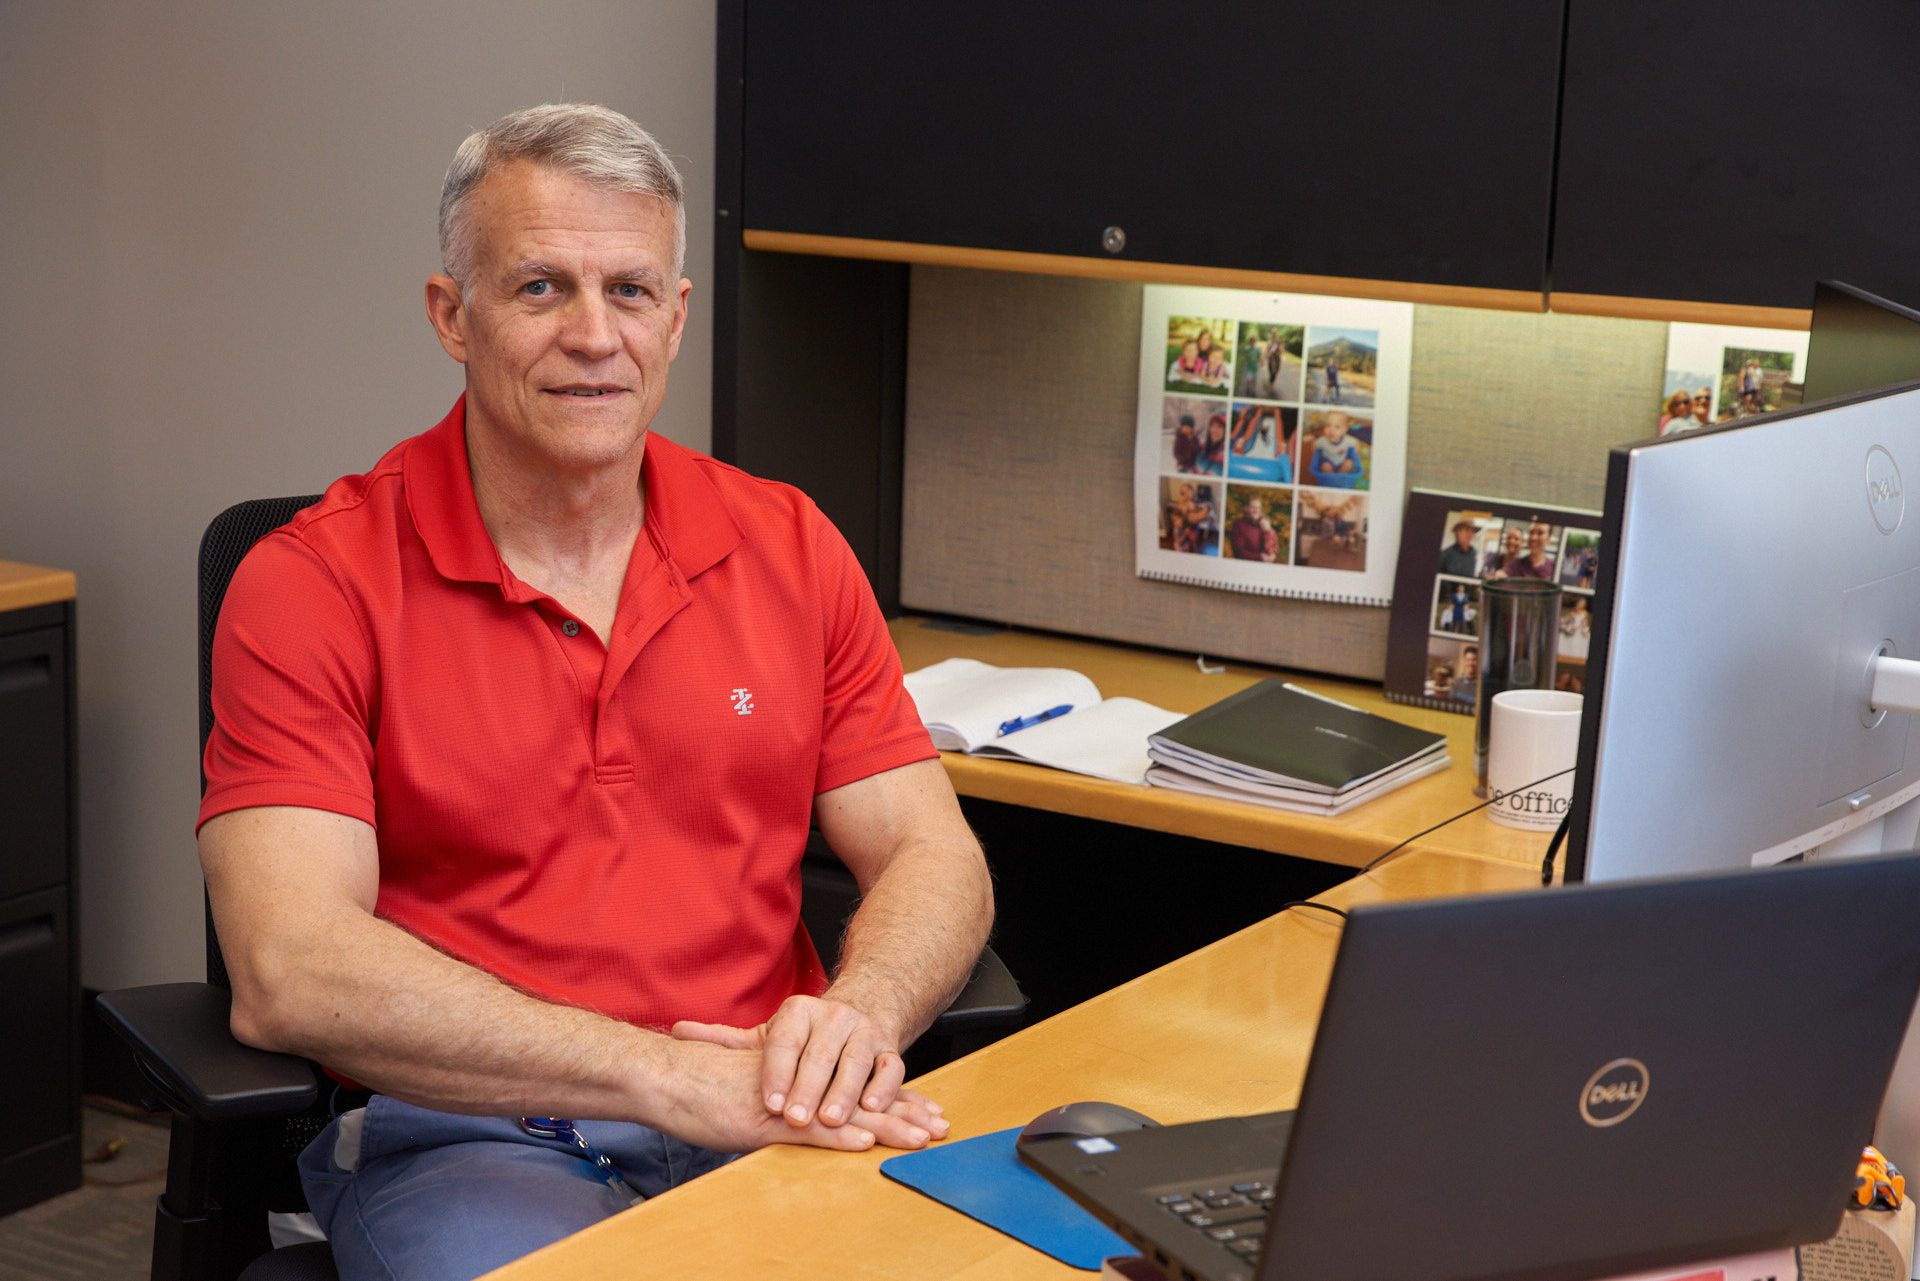 A man wearing a red shirt sits at a desk.